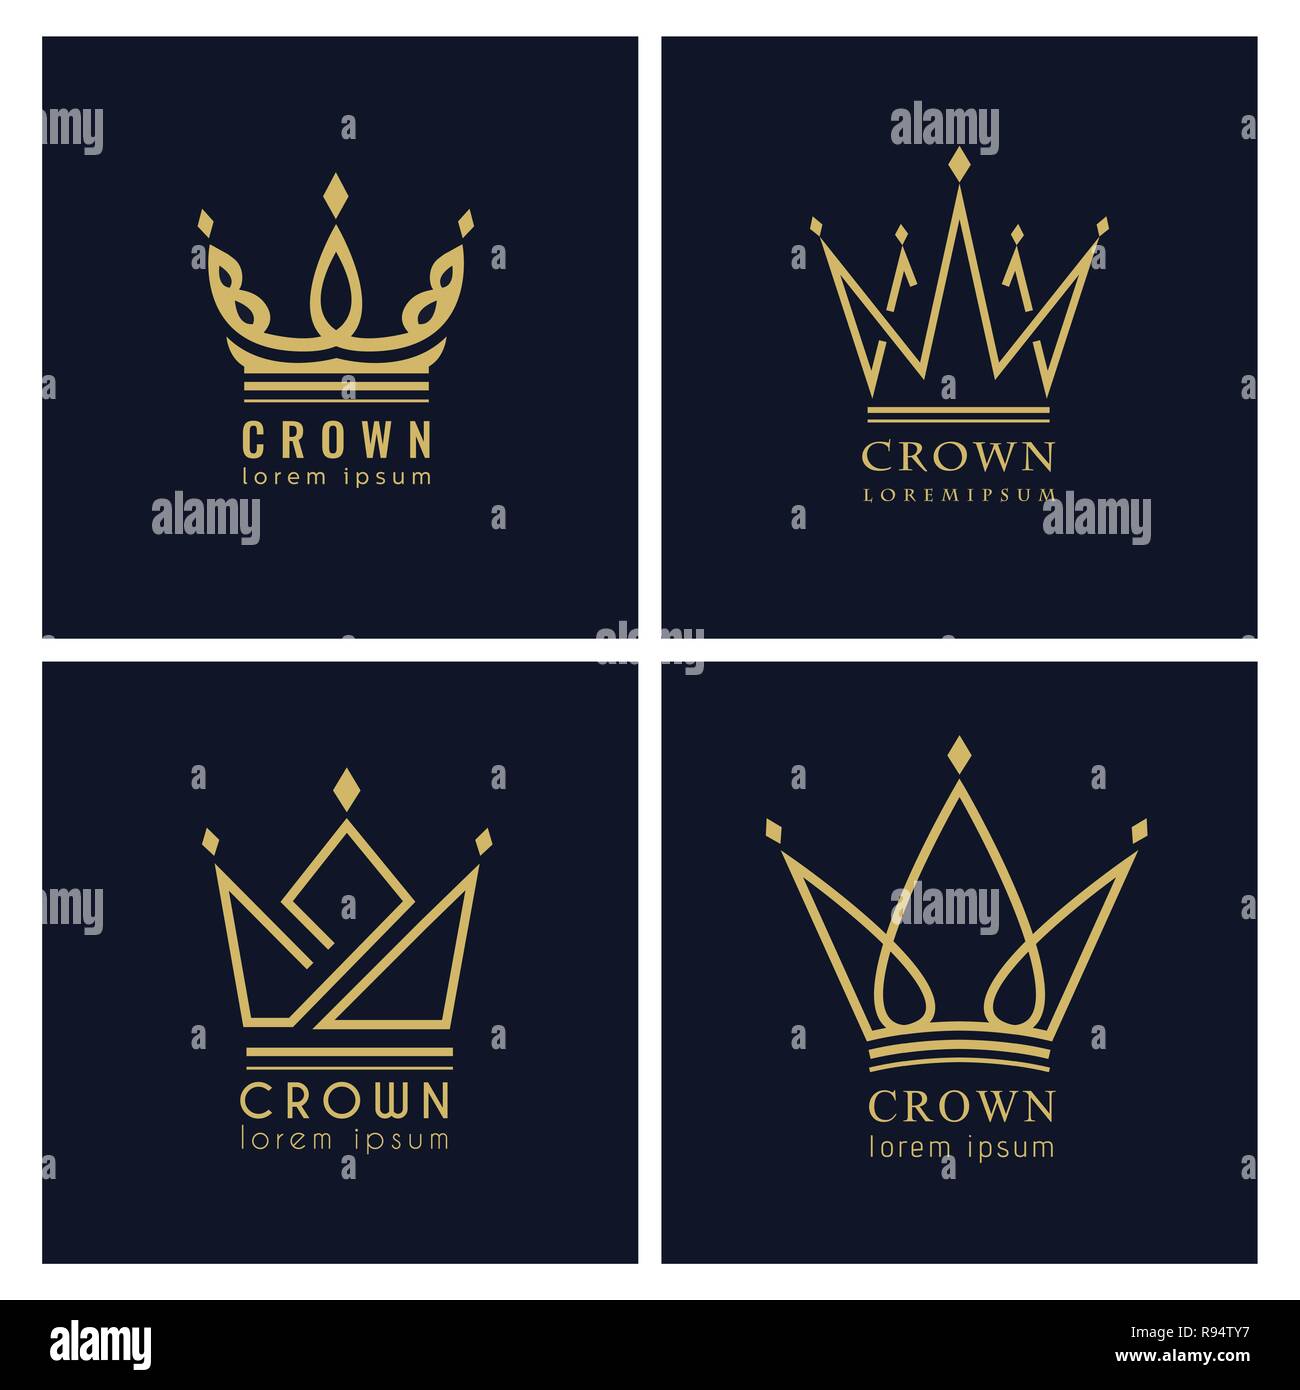 Crown logo fotografías e imágenes de alta resolución - Alamy